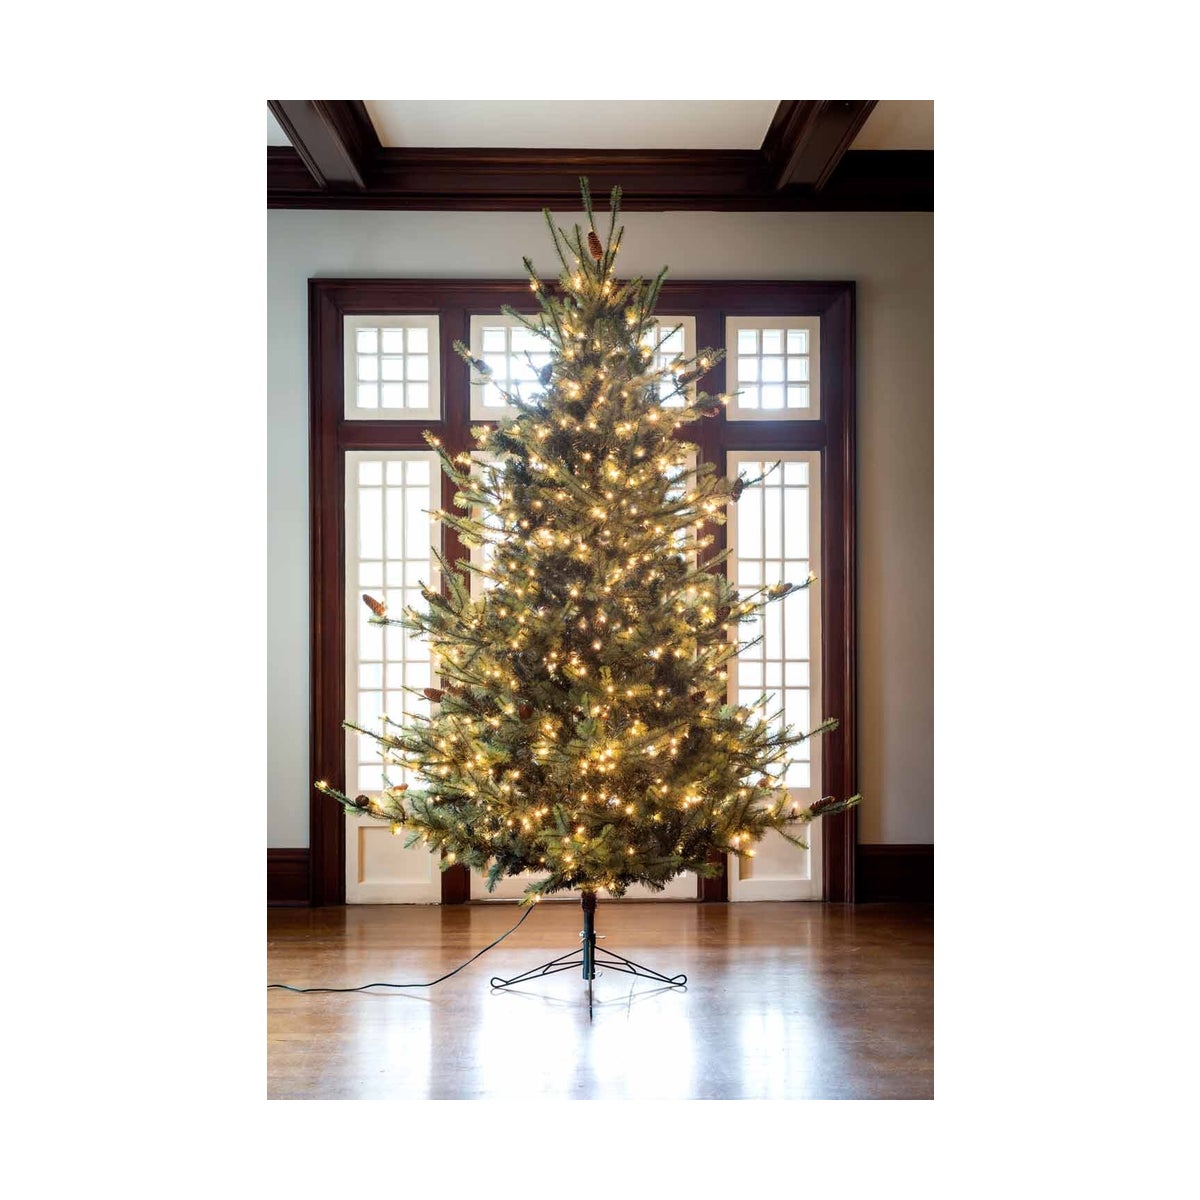 Park Hill Blue Spruce Christmas Tree, 9'